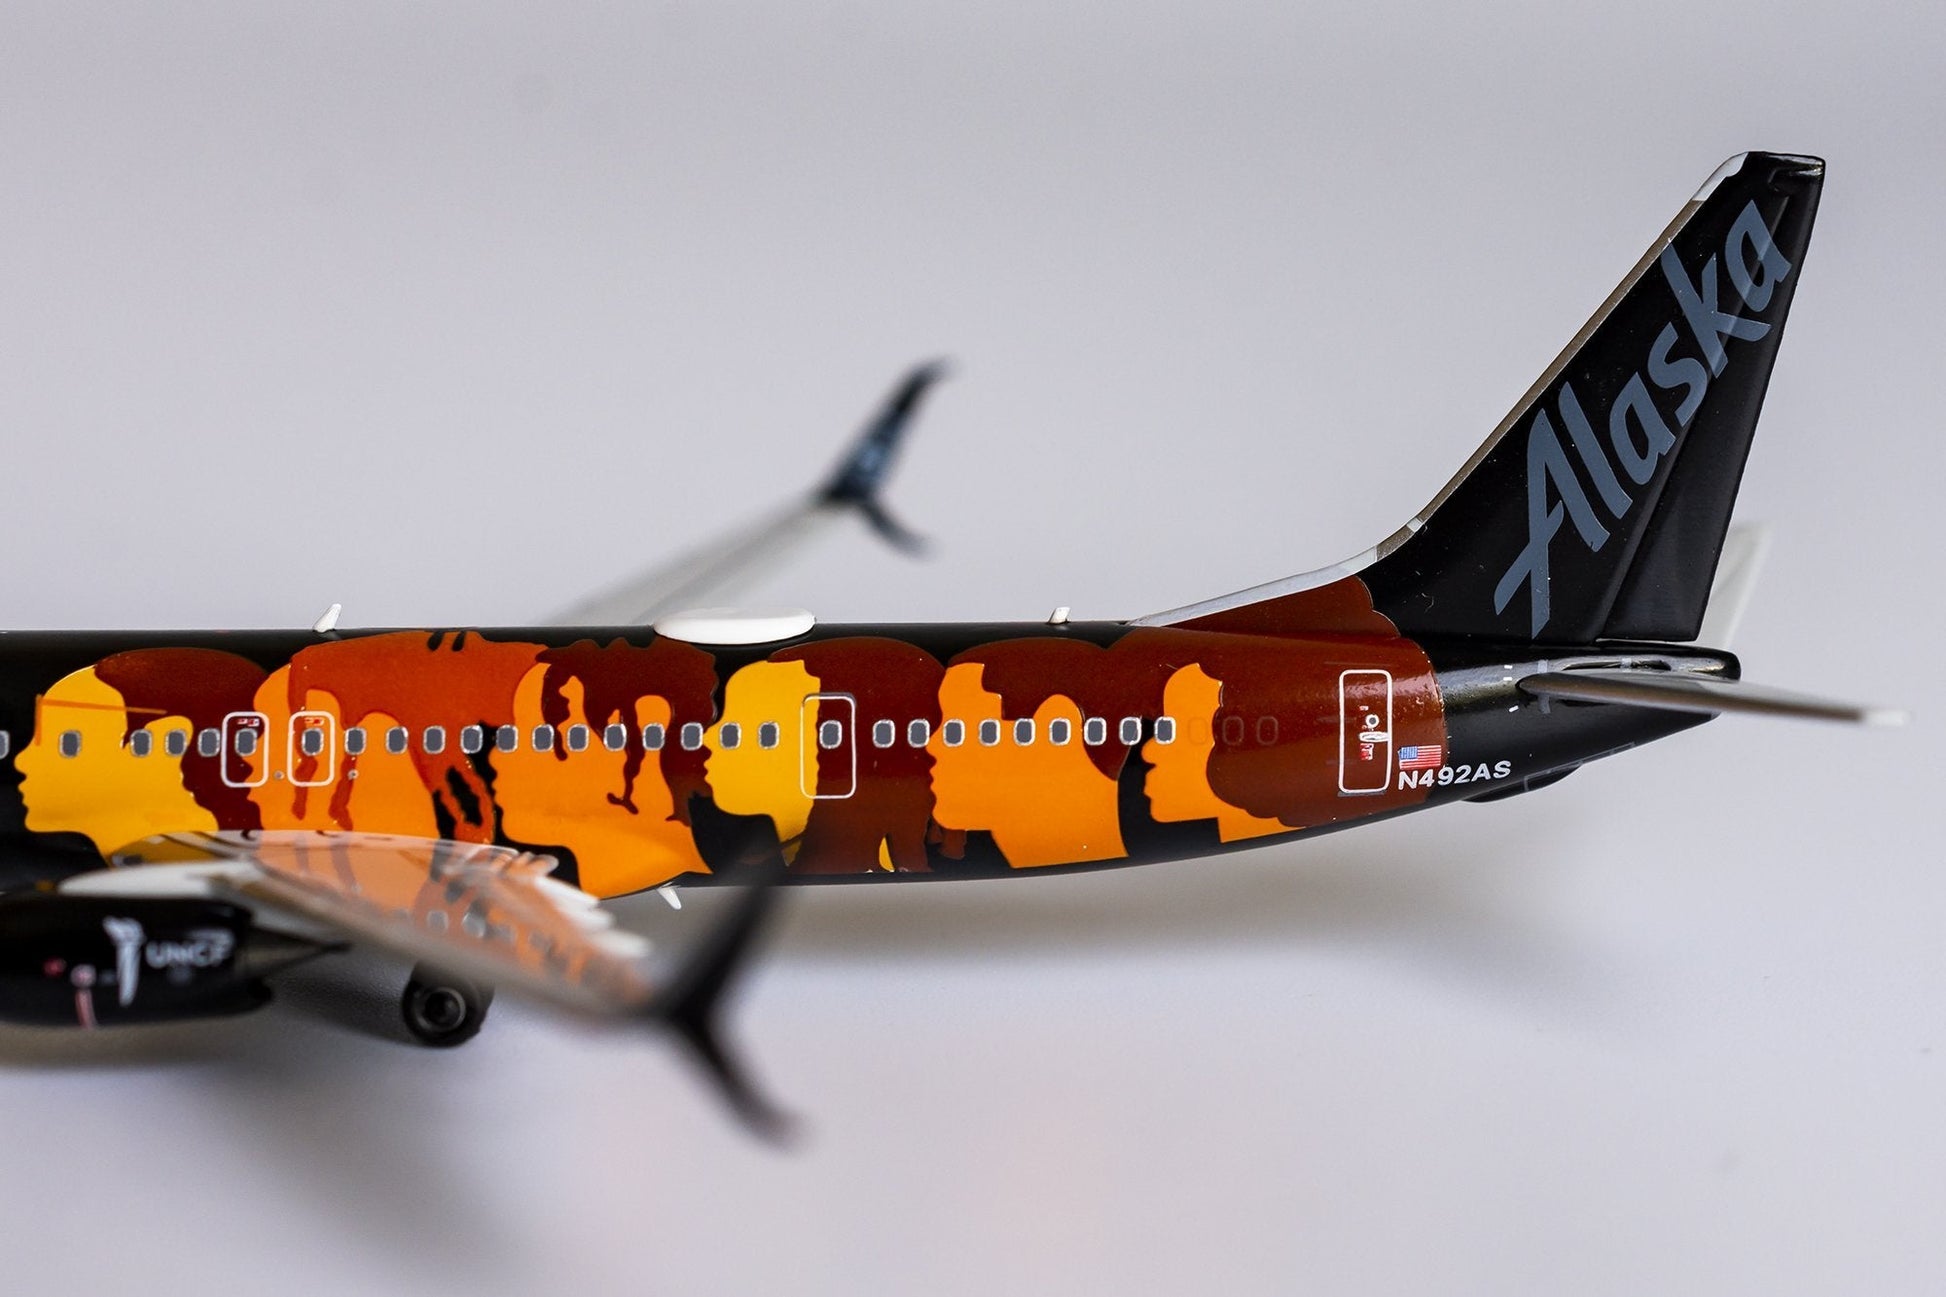 *PREORDER* 1/400 Alaska Airlines B 737-900ER "UNCF - Education Change the World" NG Models 79003 - Midwest Model Store